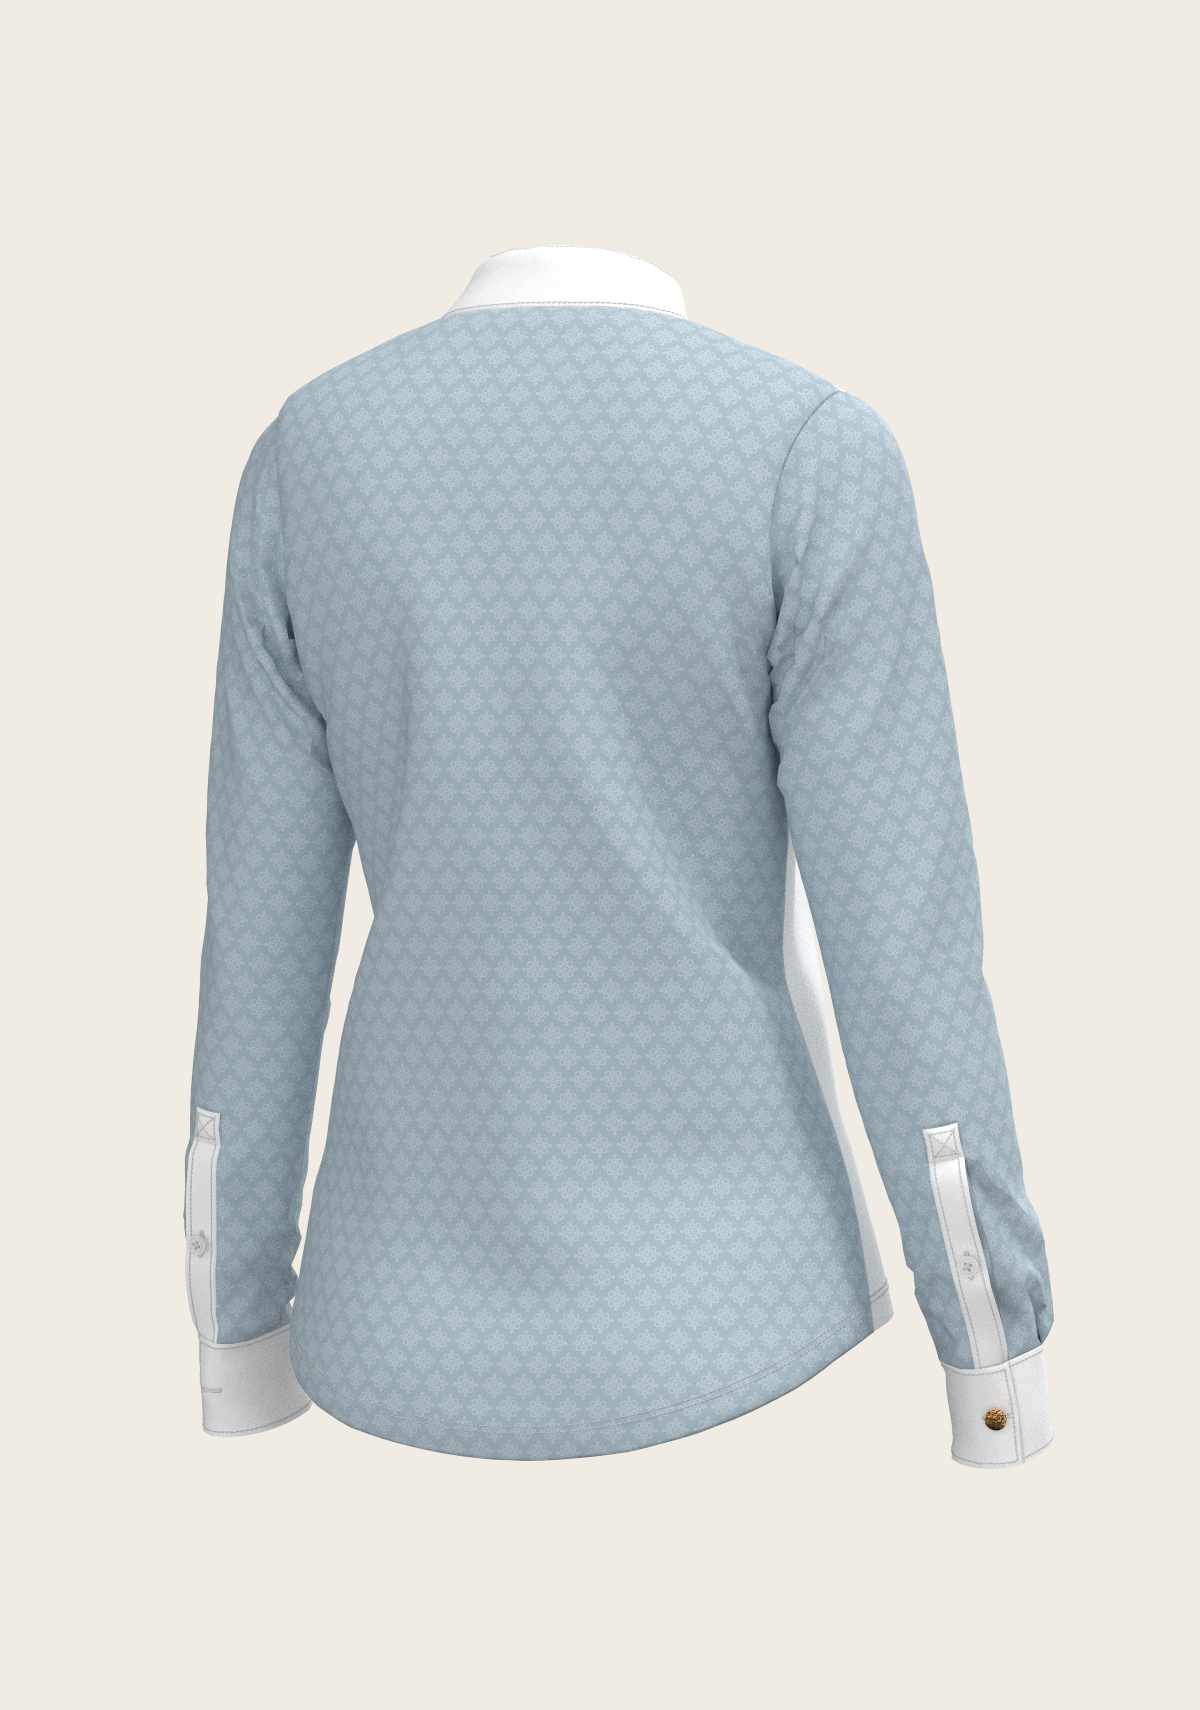 Sky Blue Long Sleeve Show Shirt by Espoir Equestrian